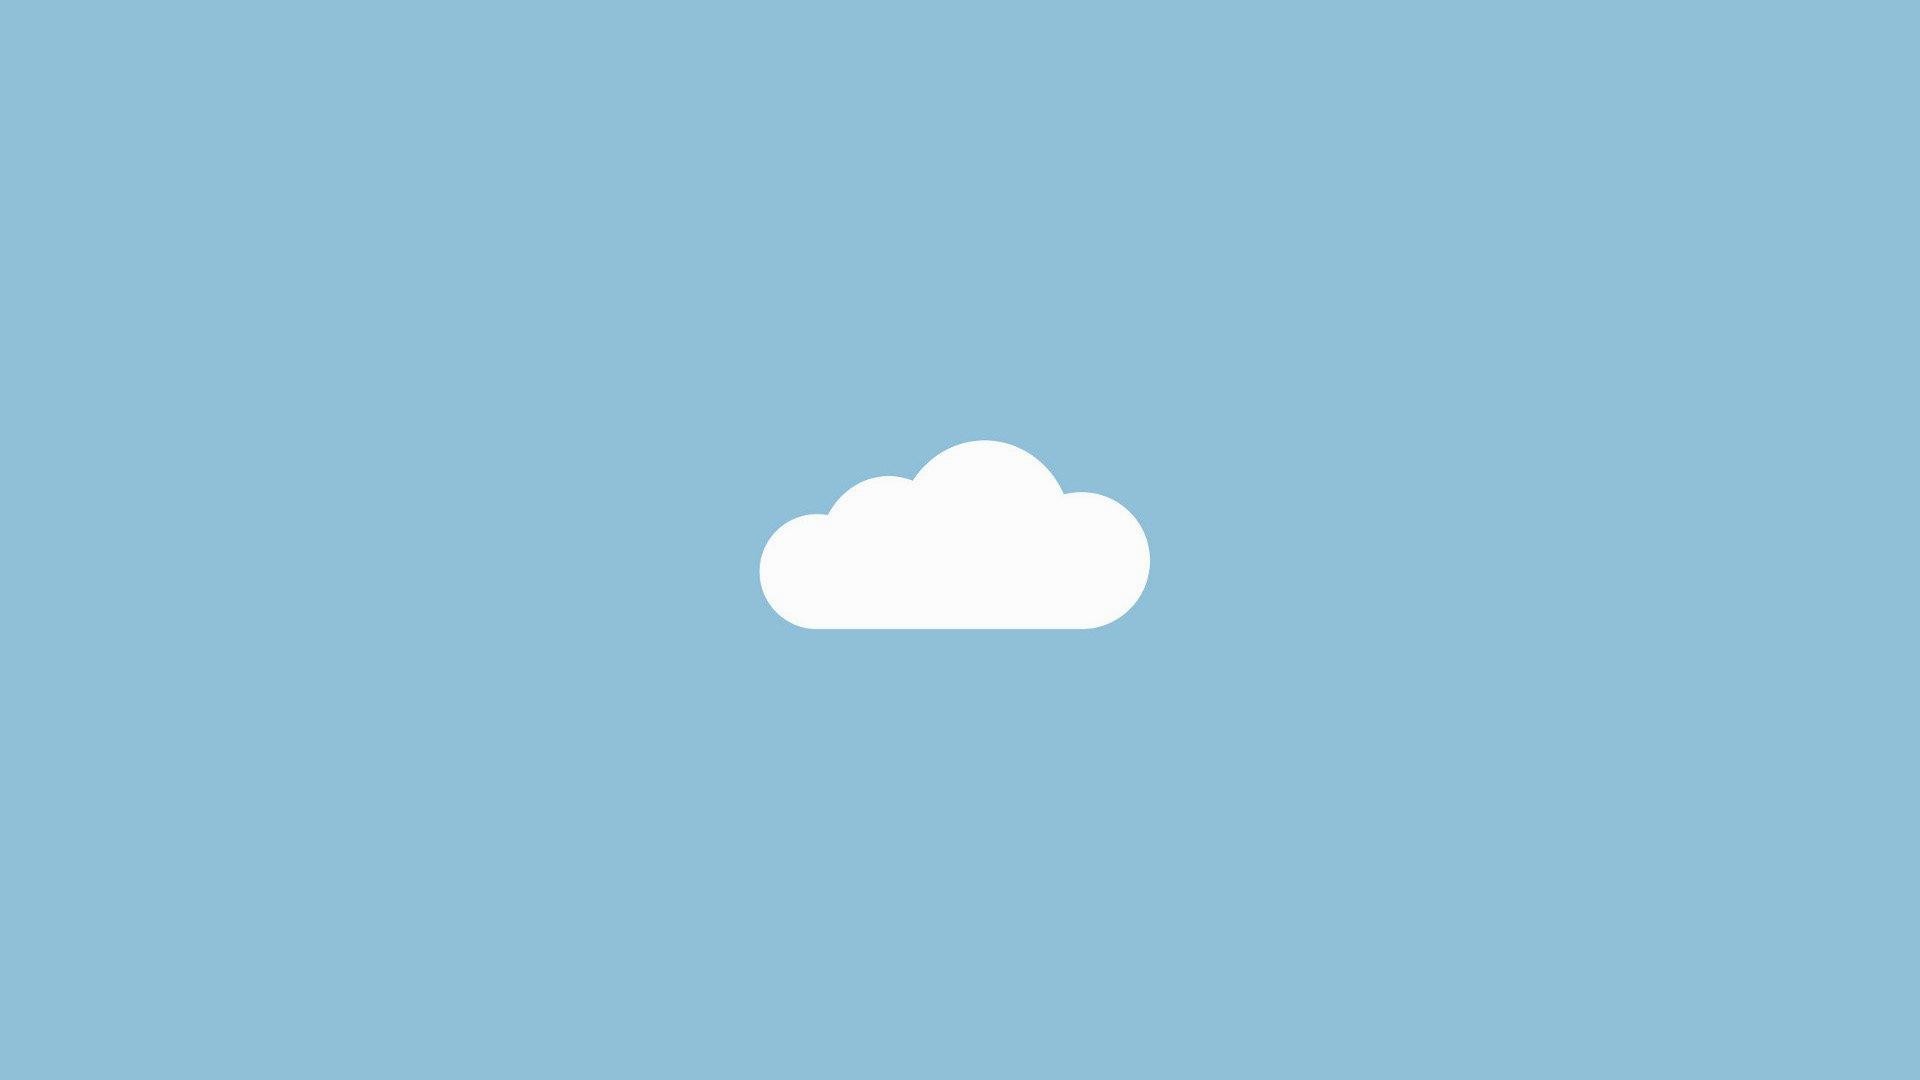 simple wallpaper download,cloud,daytime,sky,blue,azure